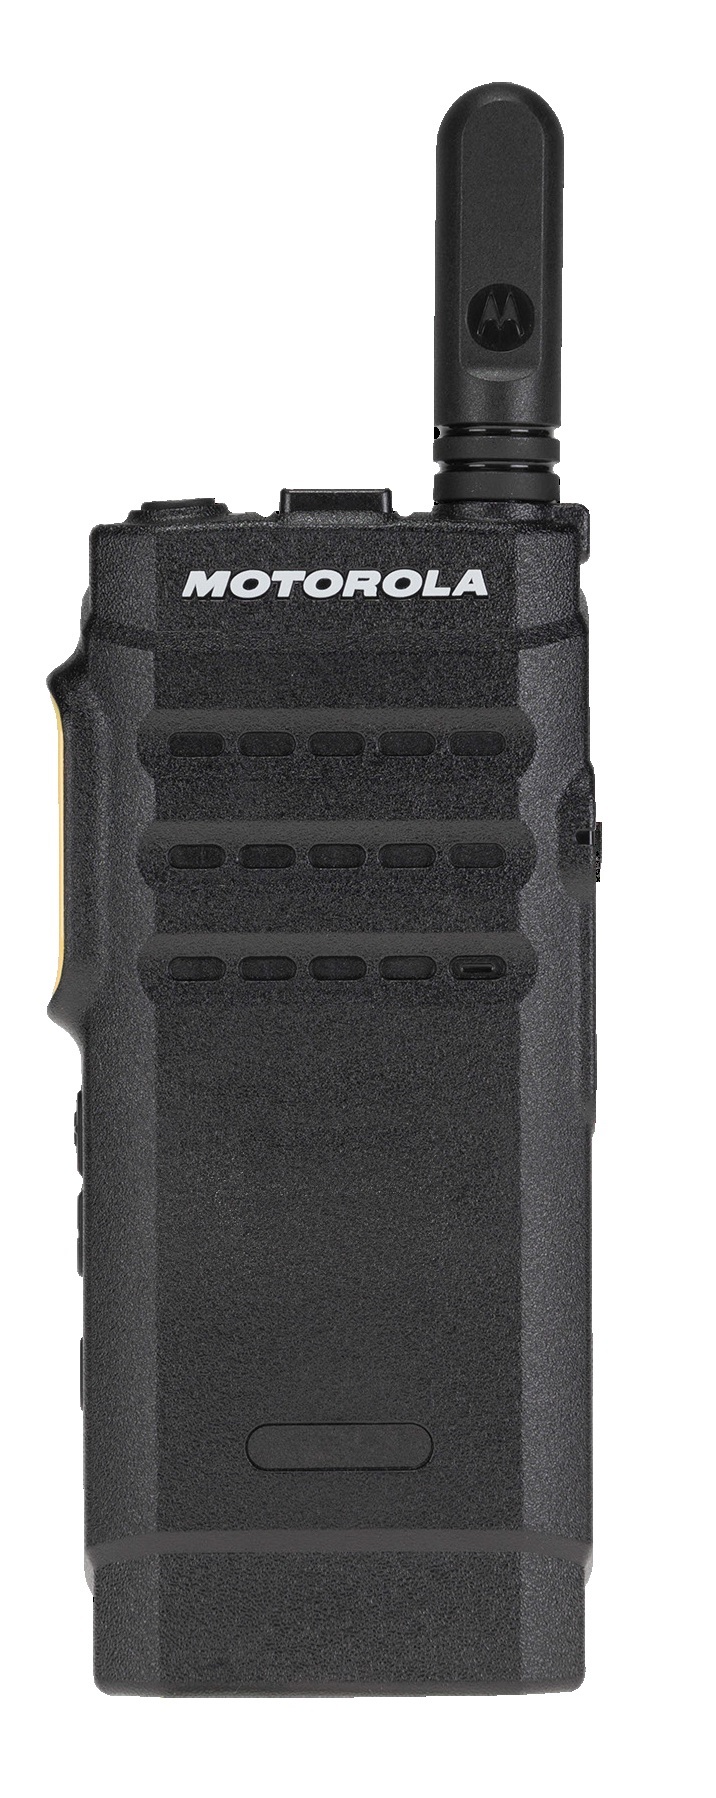 Motorola SL300, UHF (403-470 MHz), 3 Watts, 2 Channels, Digital/Analog Radio, Non-Display Model